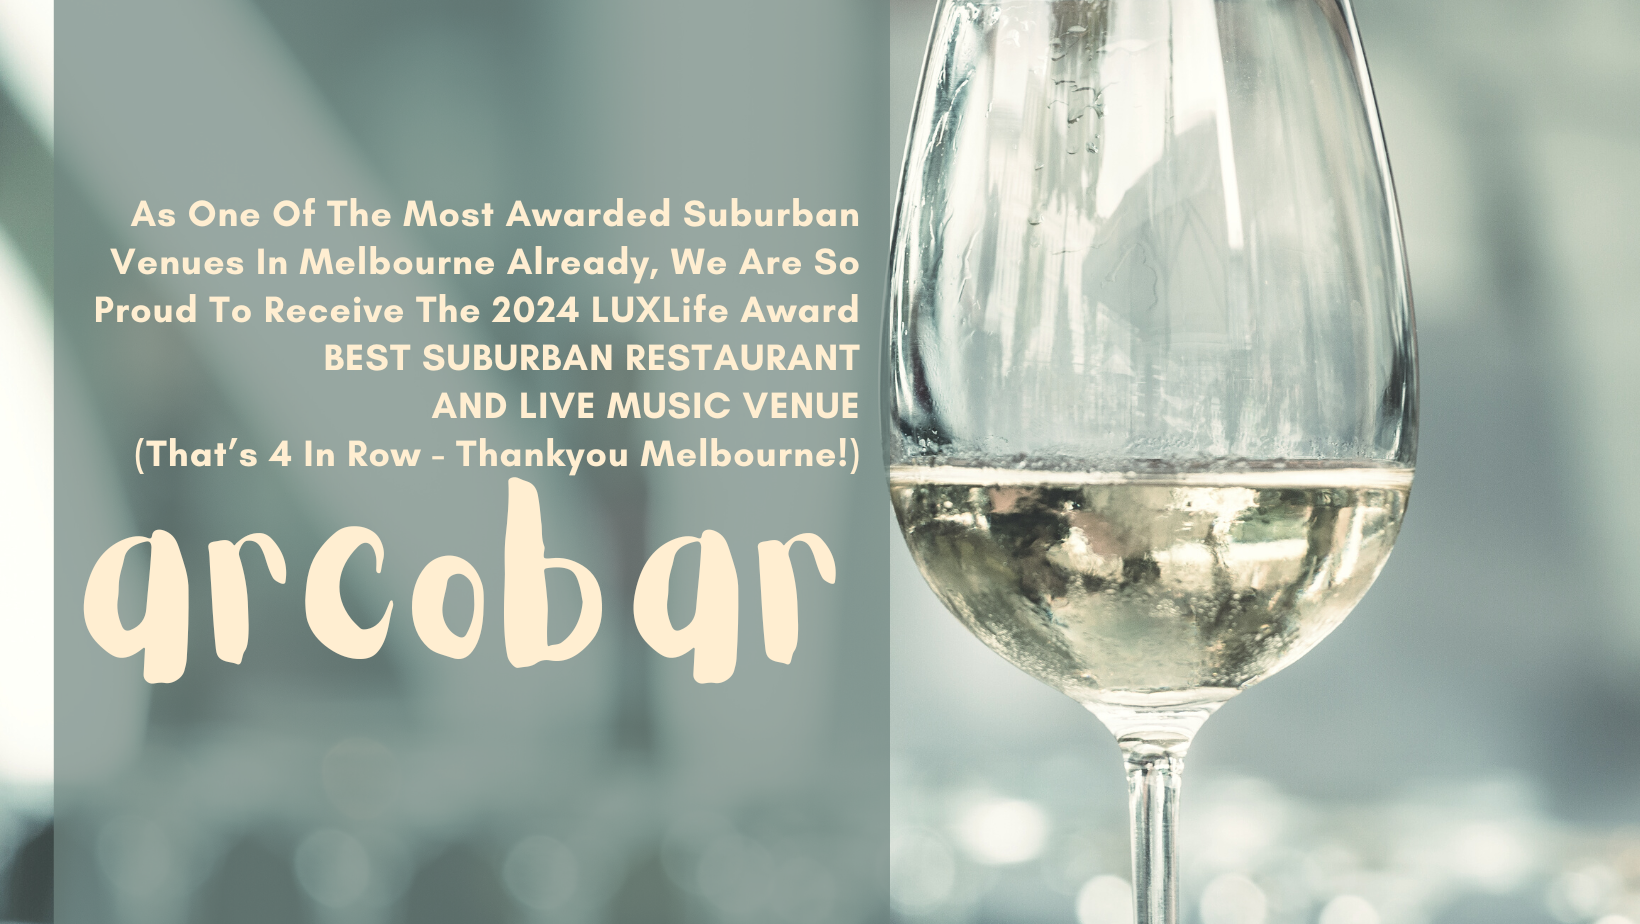 Arcobar once again awarded LUXlife Best Restaurant & Live Music Venue (Melbourne)